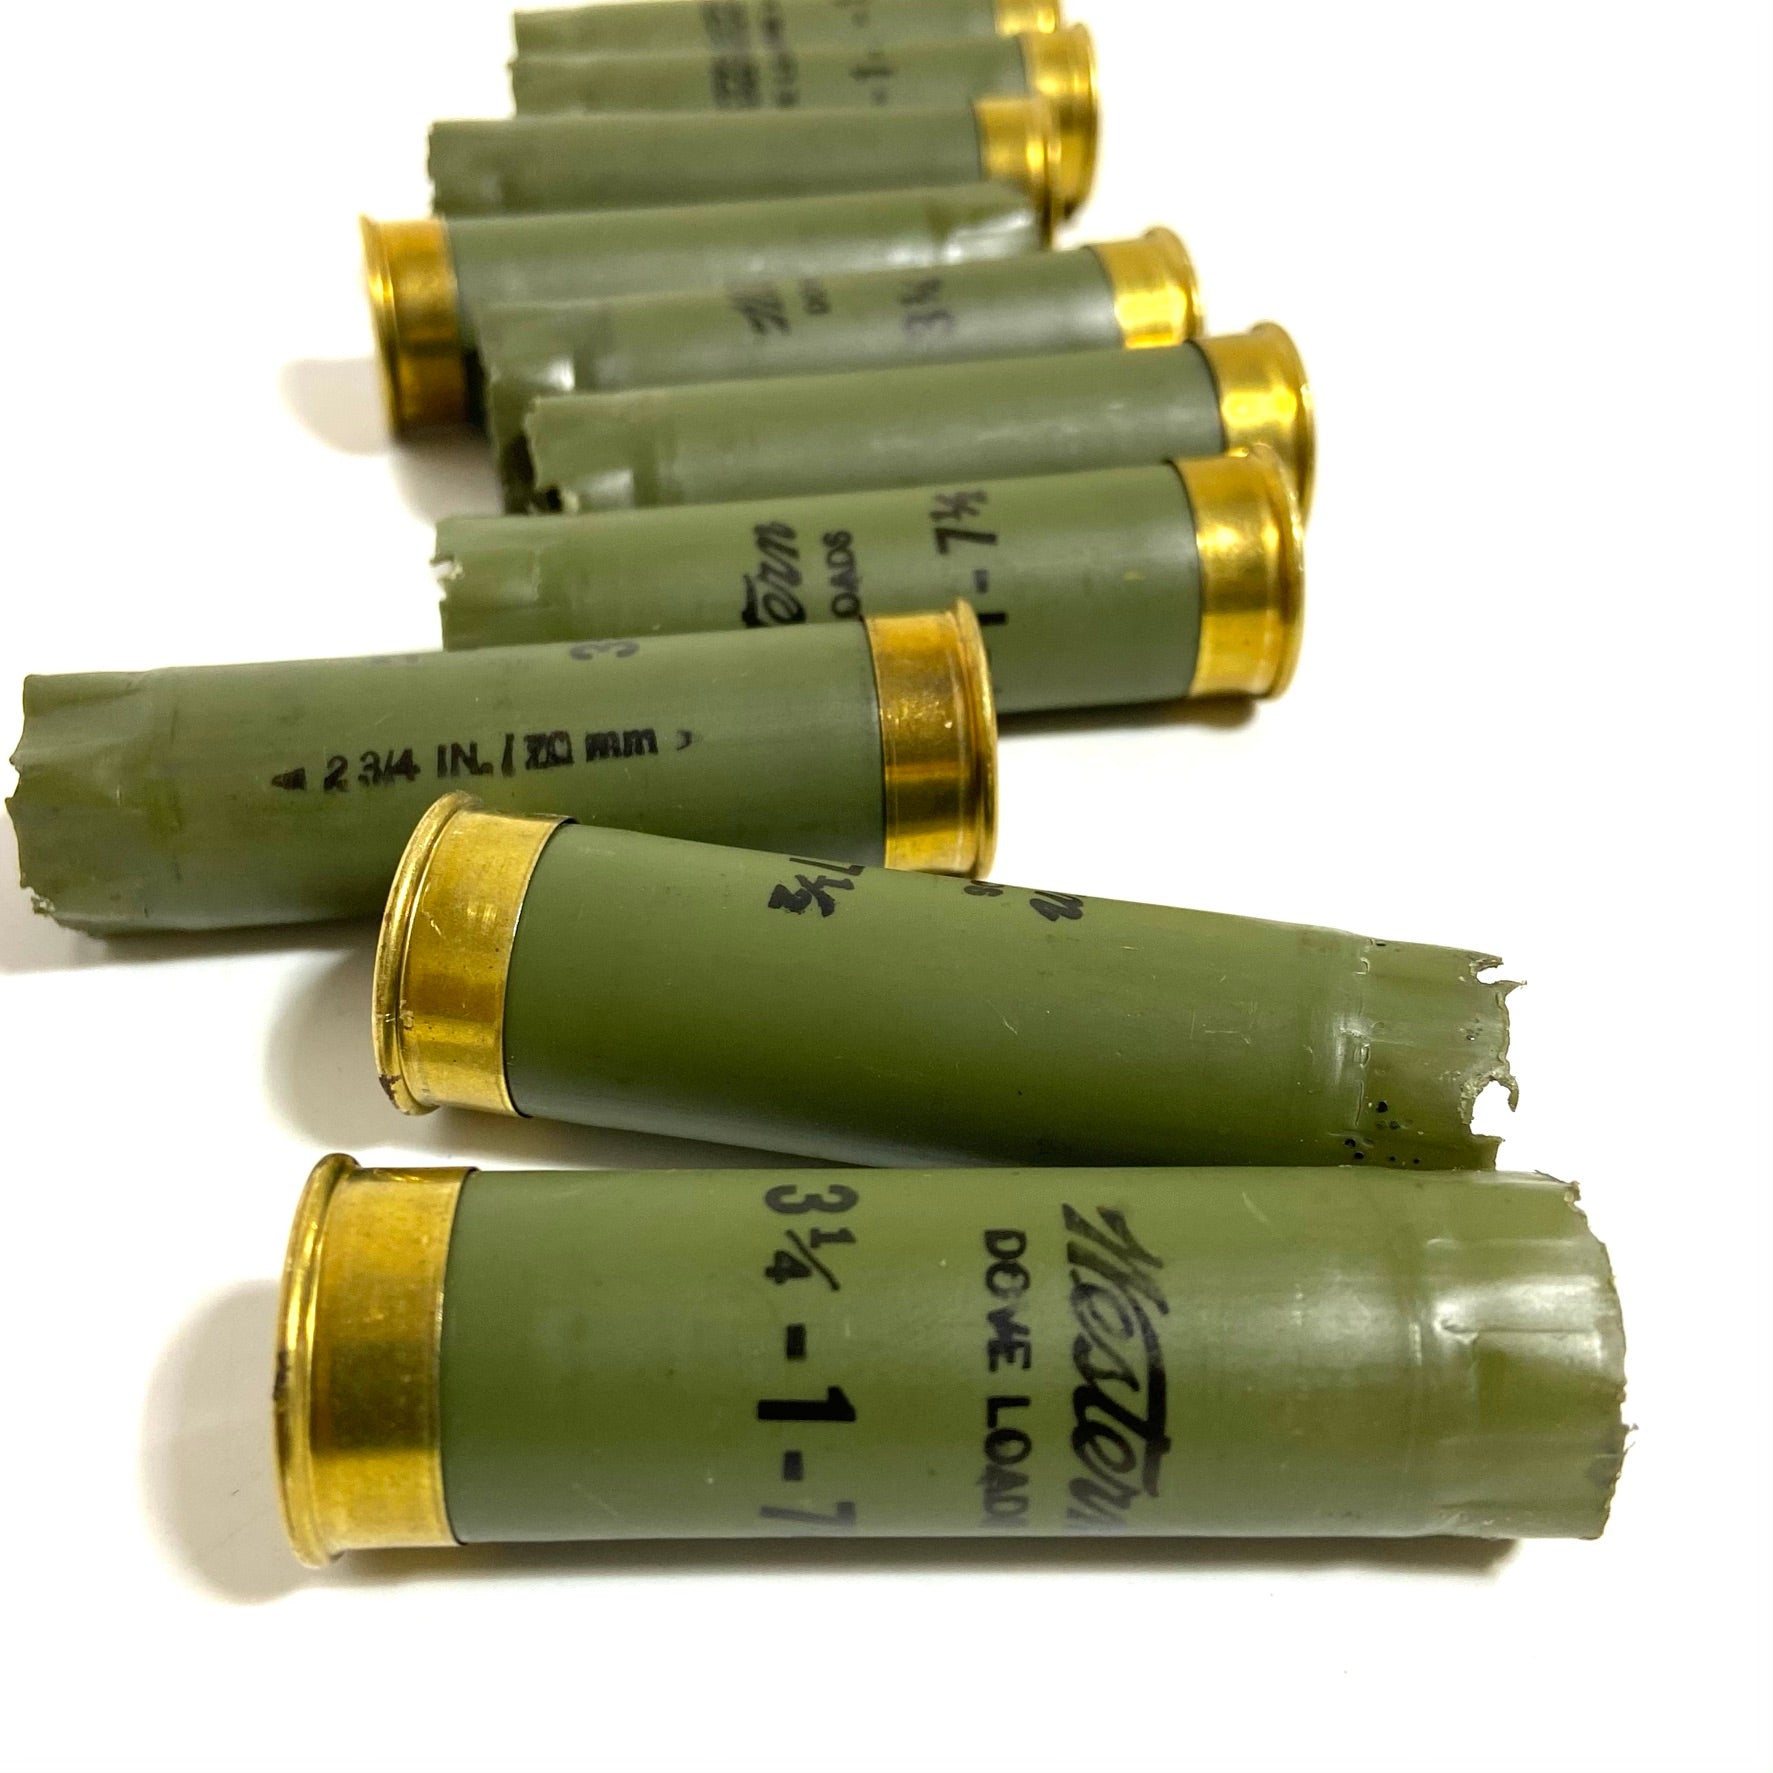 Green Shotgun Shells 12 Gauge Spent Hulls Remington Express 12GA